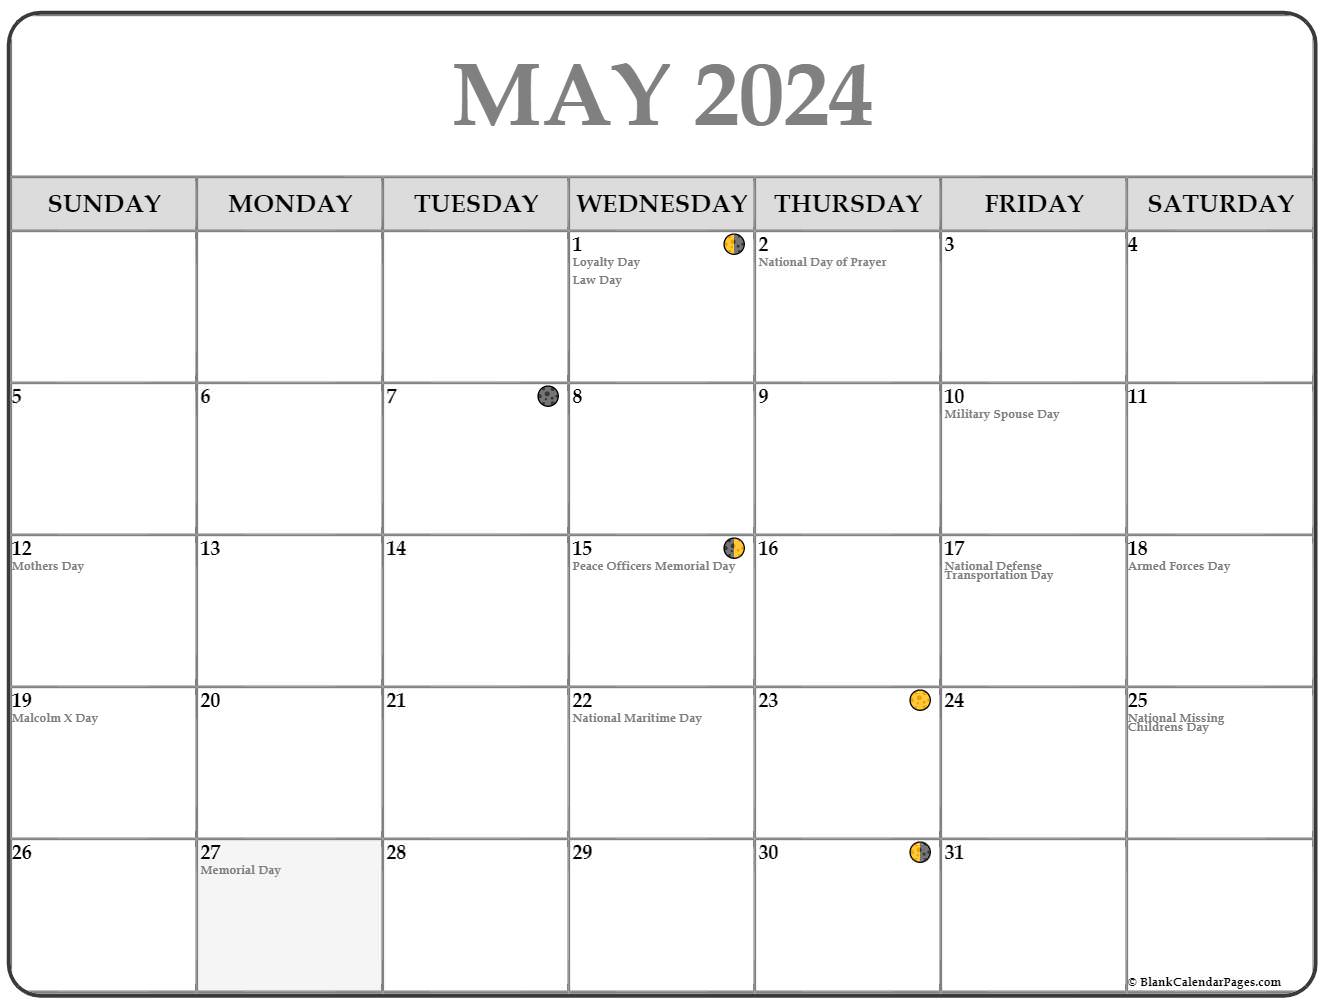 Lunar Calendar May 2022 May 2022 Lunar Calendar | Moon Phase Calendar